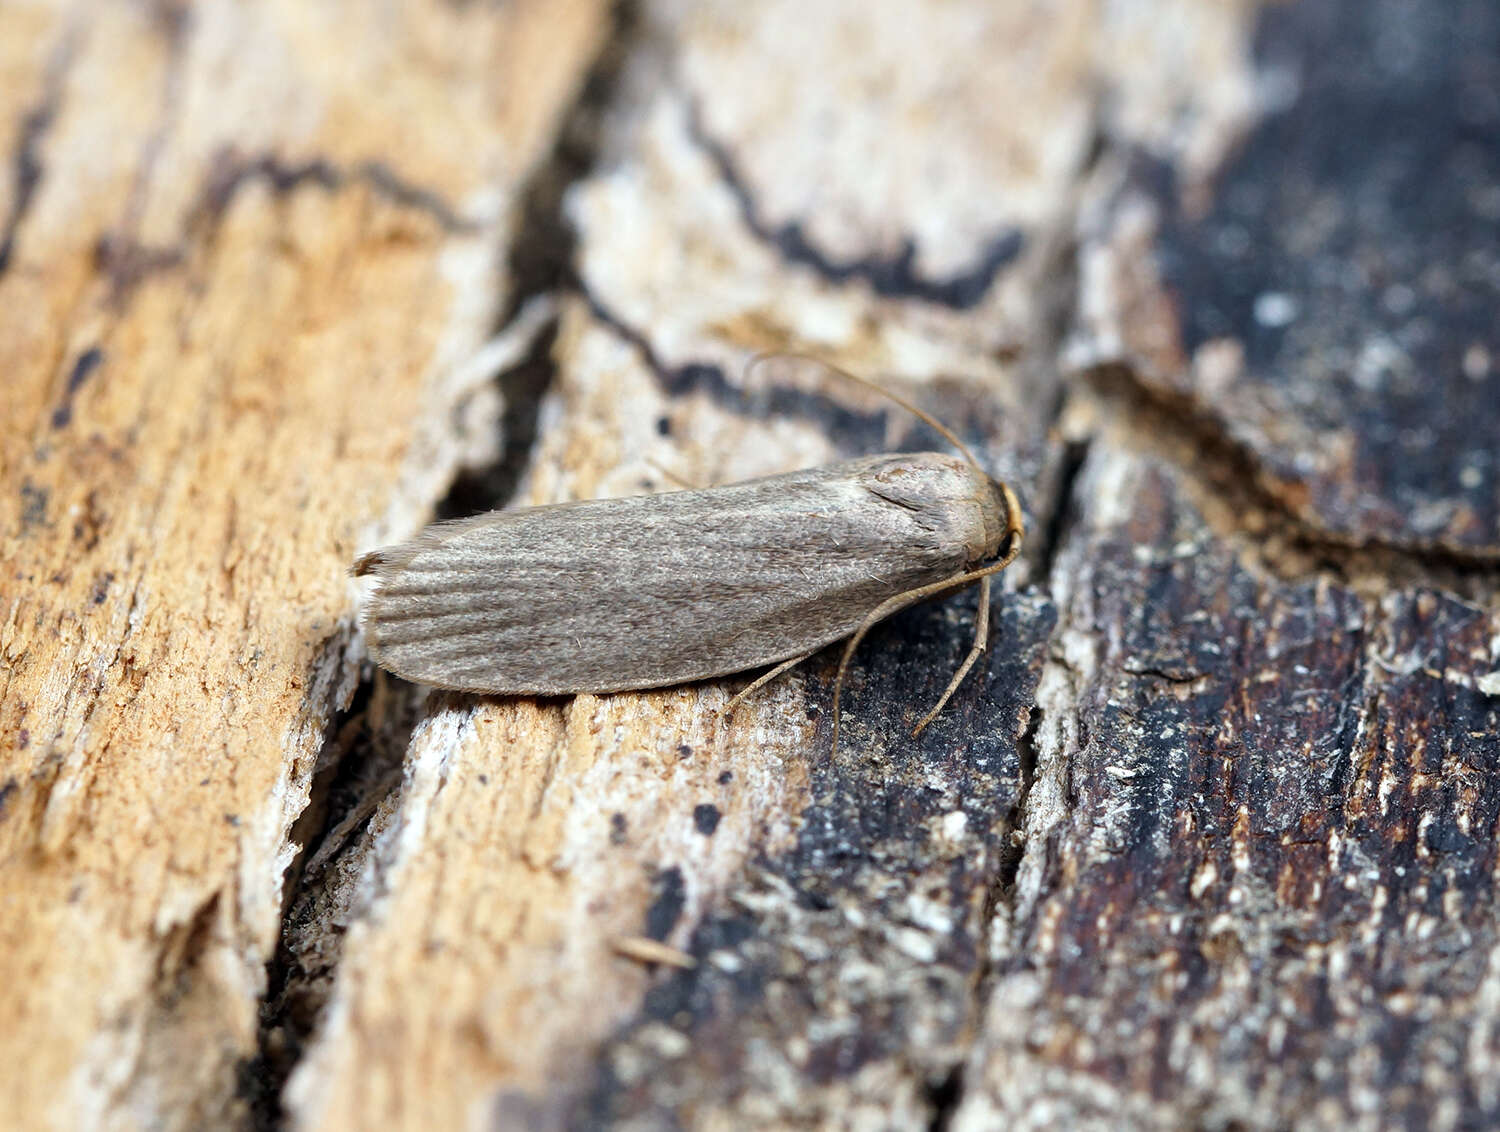 Image of Lesser Wax Moth